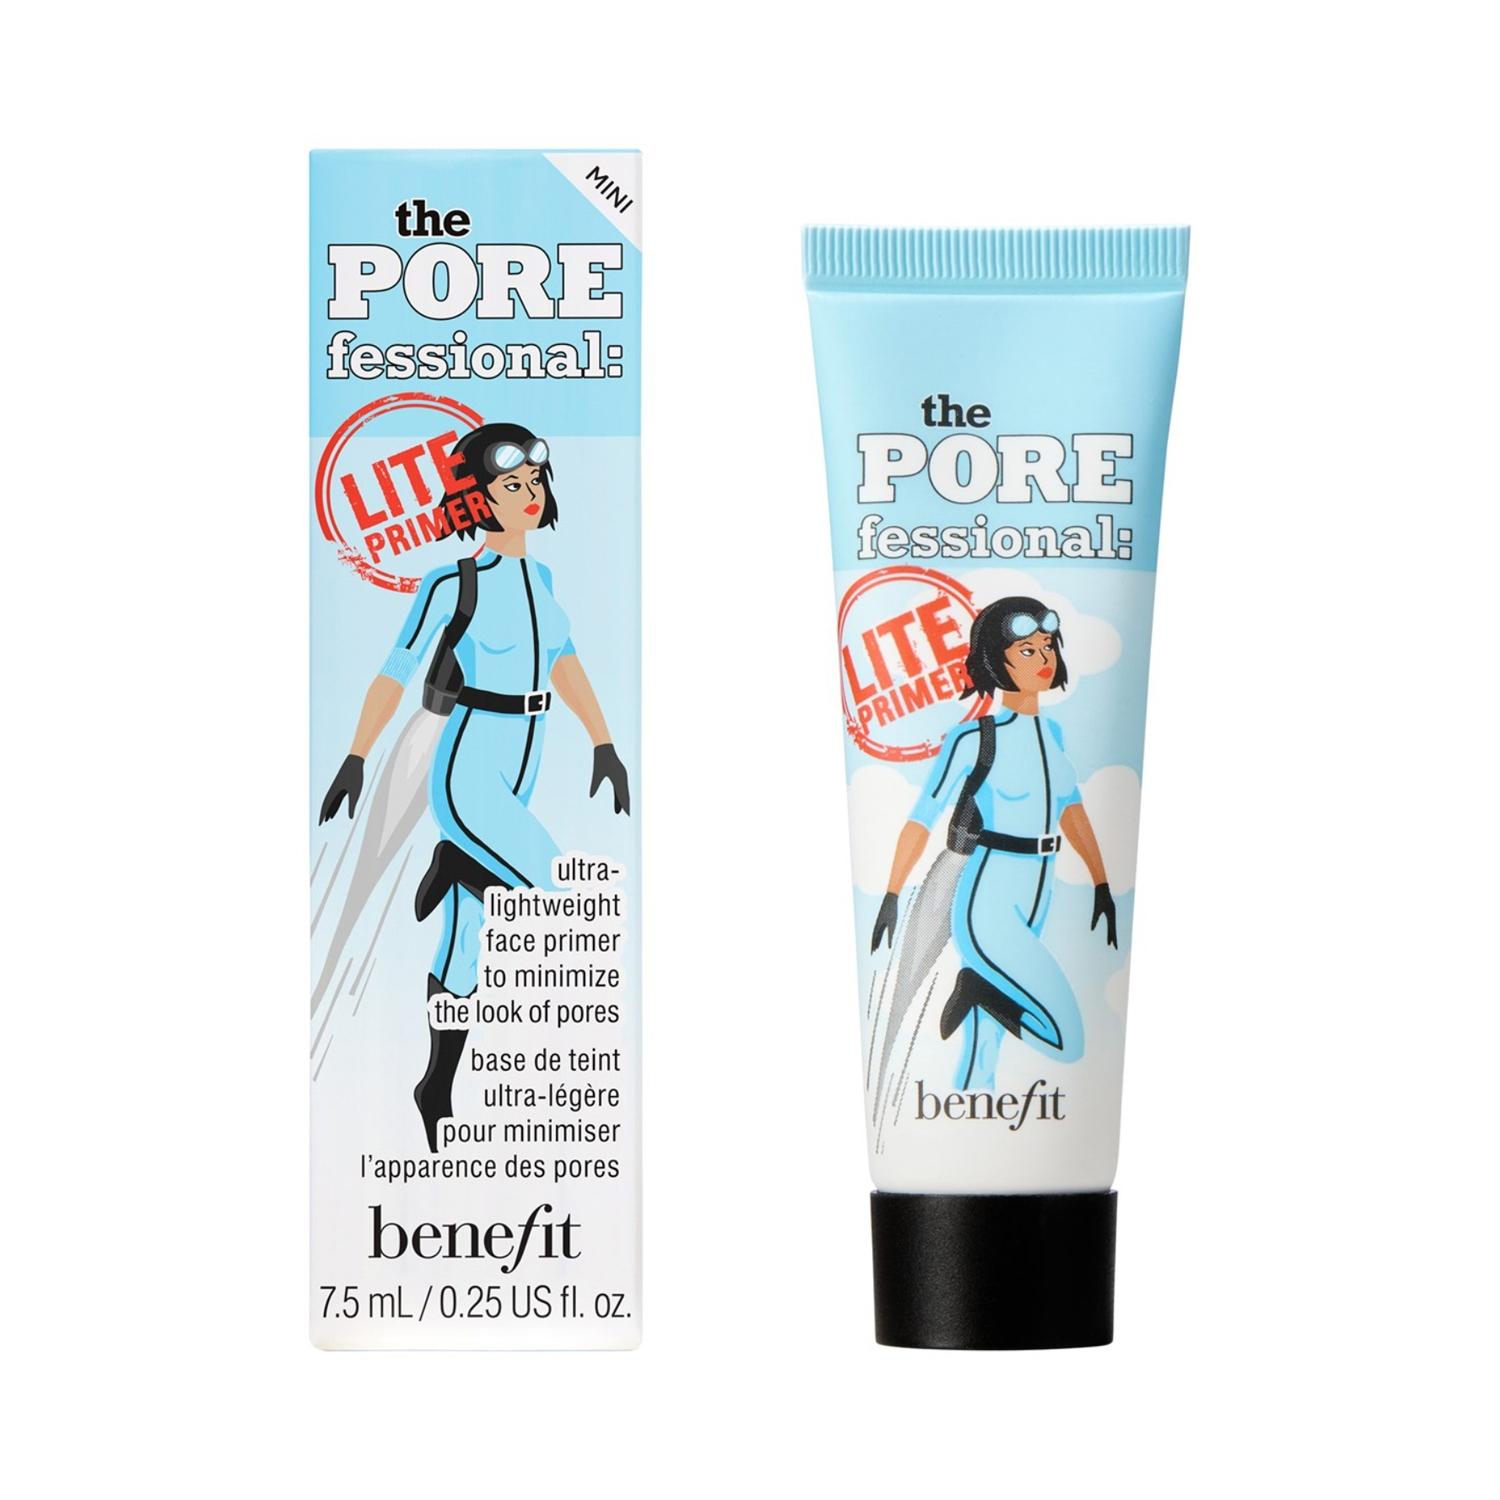 benefit cosmetics the porefessional lite face primer mini - transparent (7.5ml)